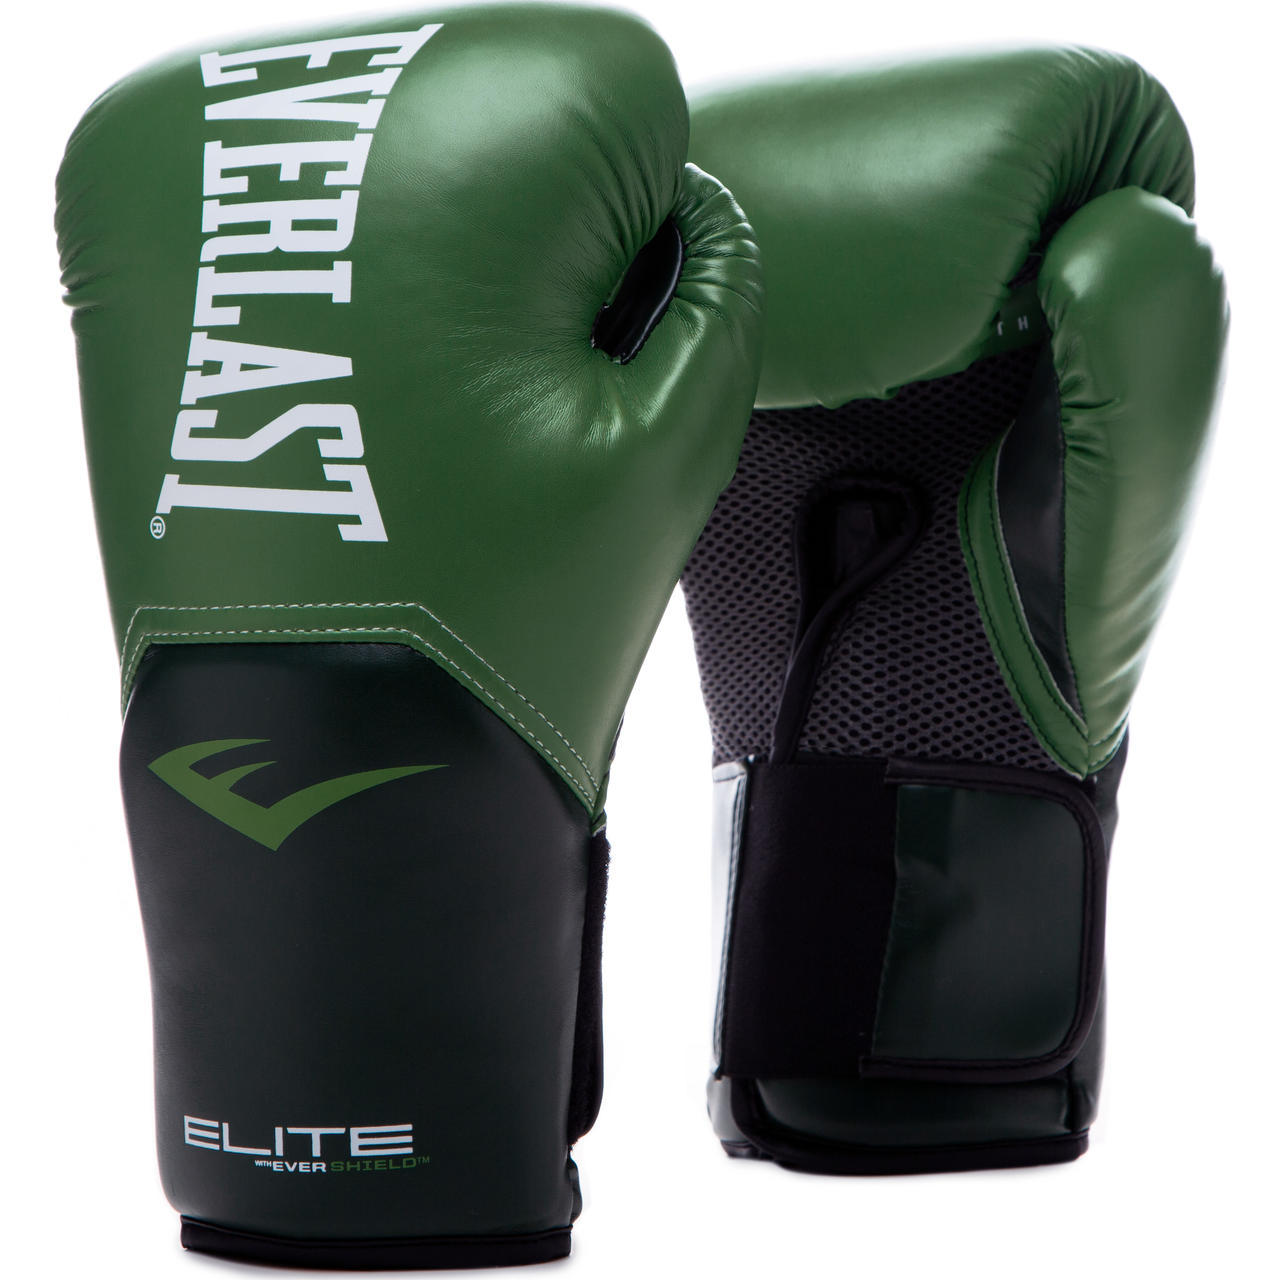  Боксерские перчатки Everlast ELITE PROSTYLE зеленые 